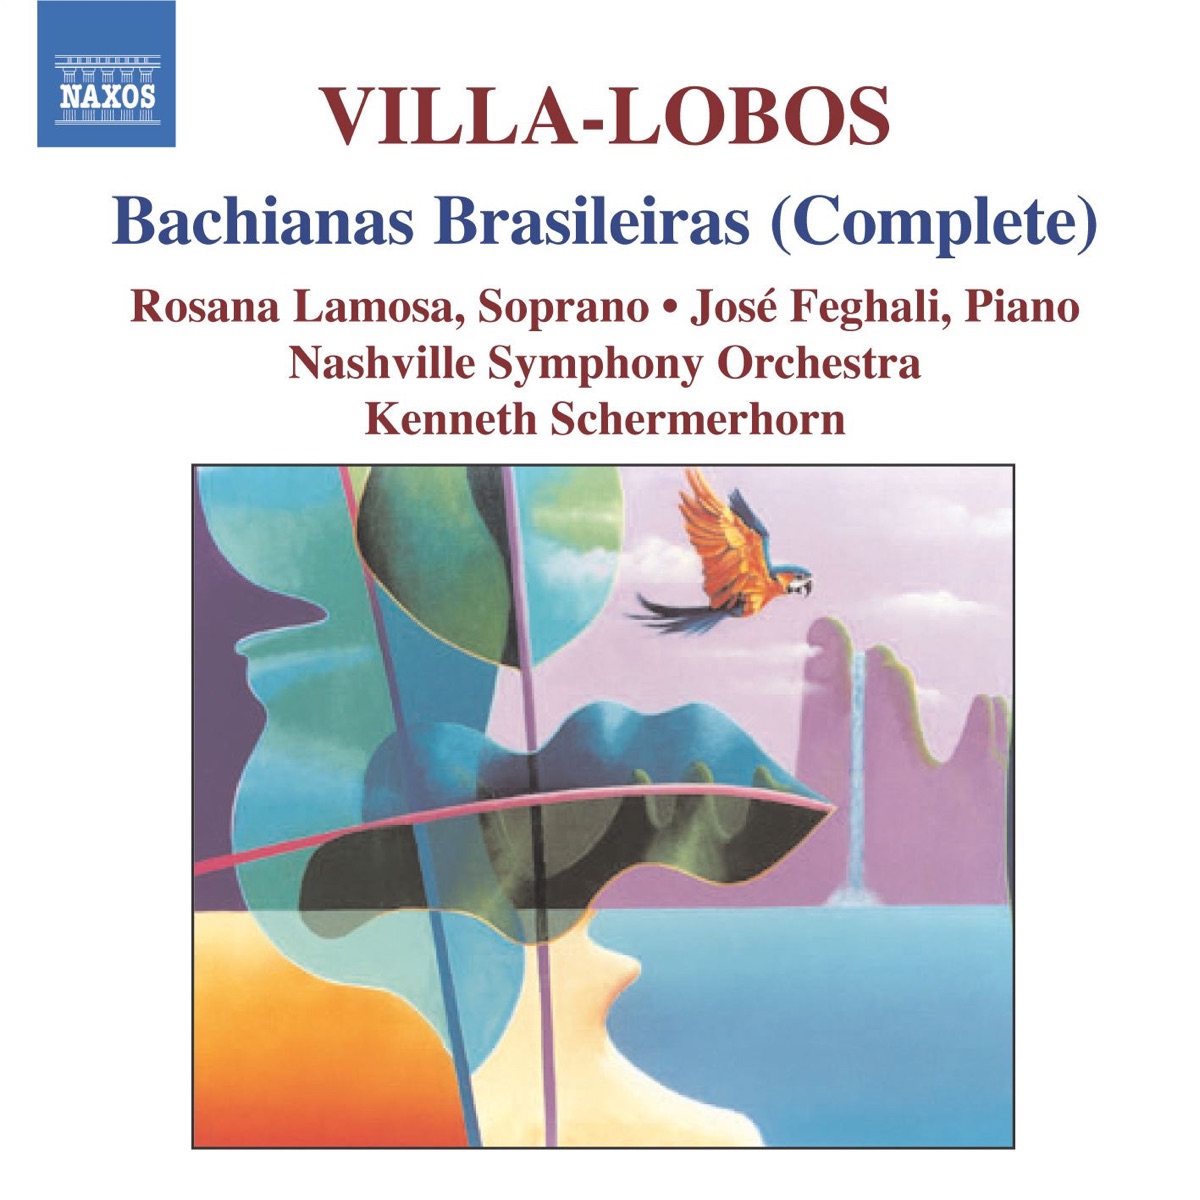 Villa-Lobos: Bachnias Brasileiras (Complete) by Kenneth Schermerhorn,  Nashville Symphony & Rosana Lamosa on Apple Music